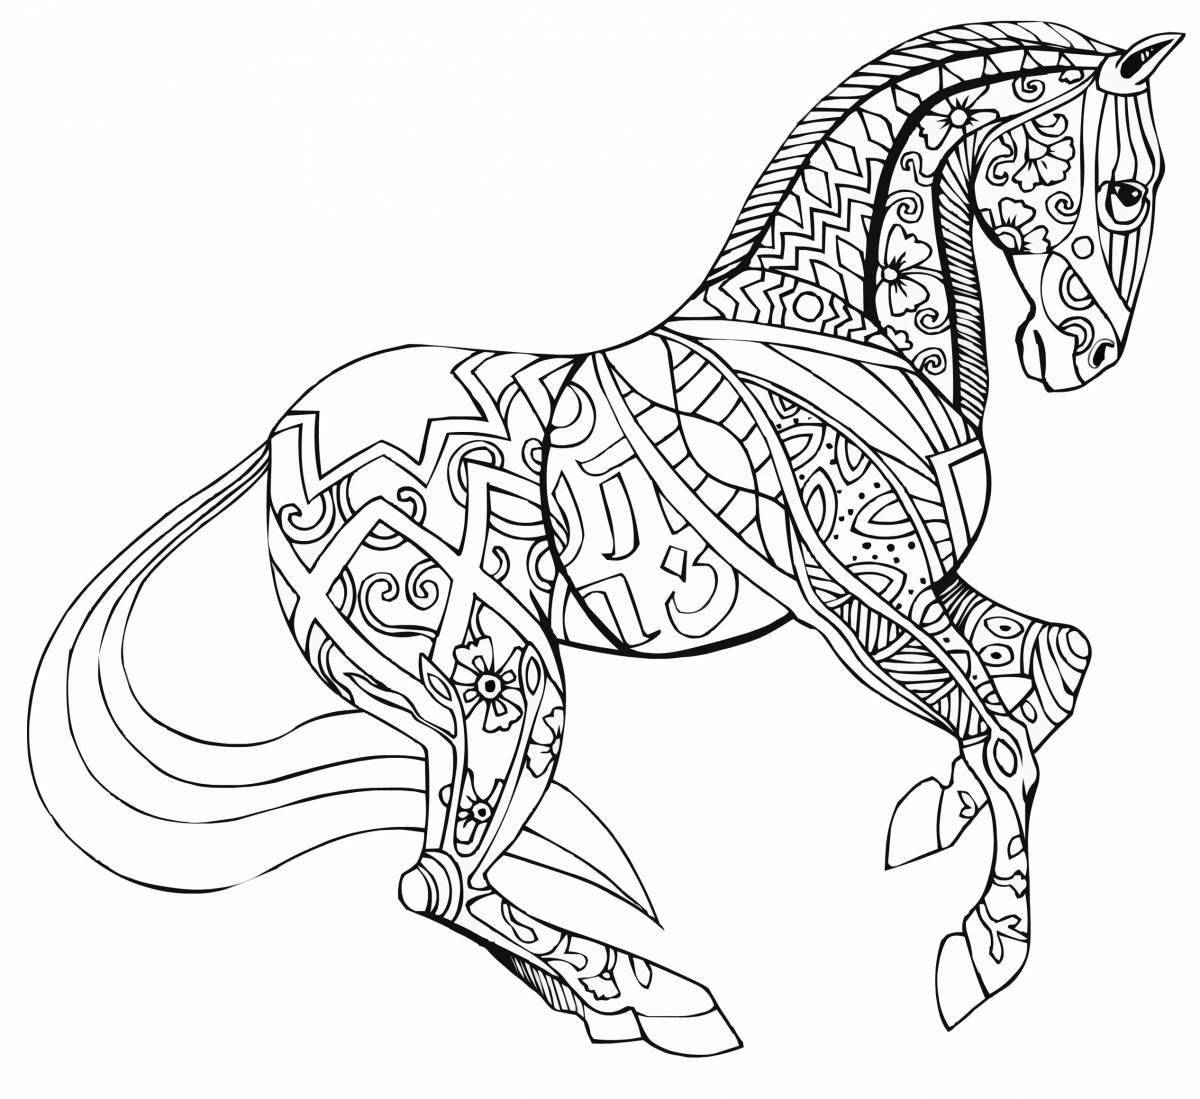 Inviting coloring horse antistress